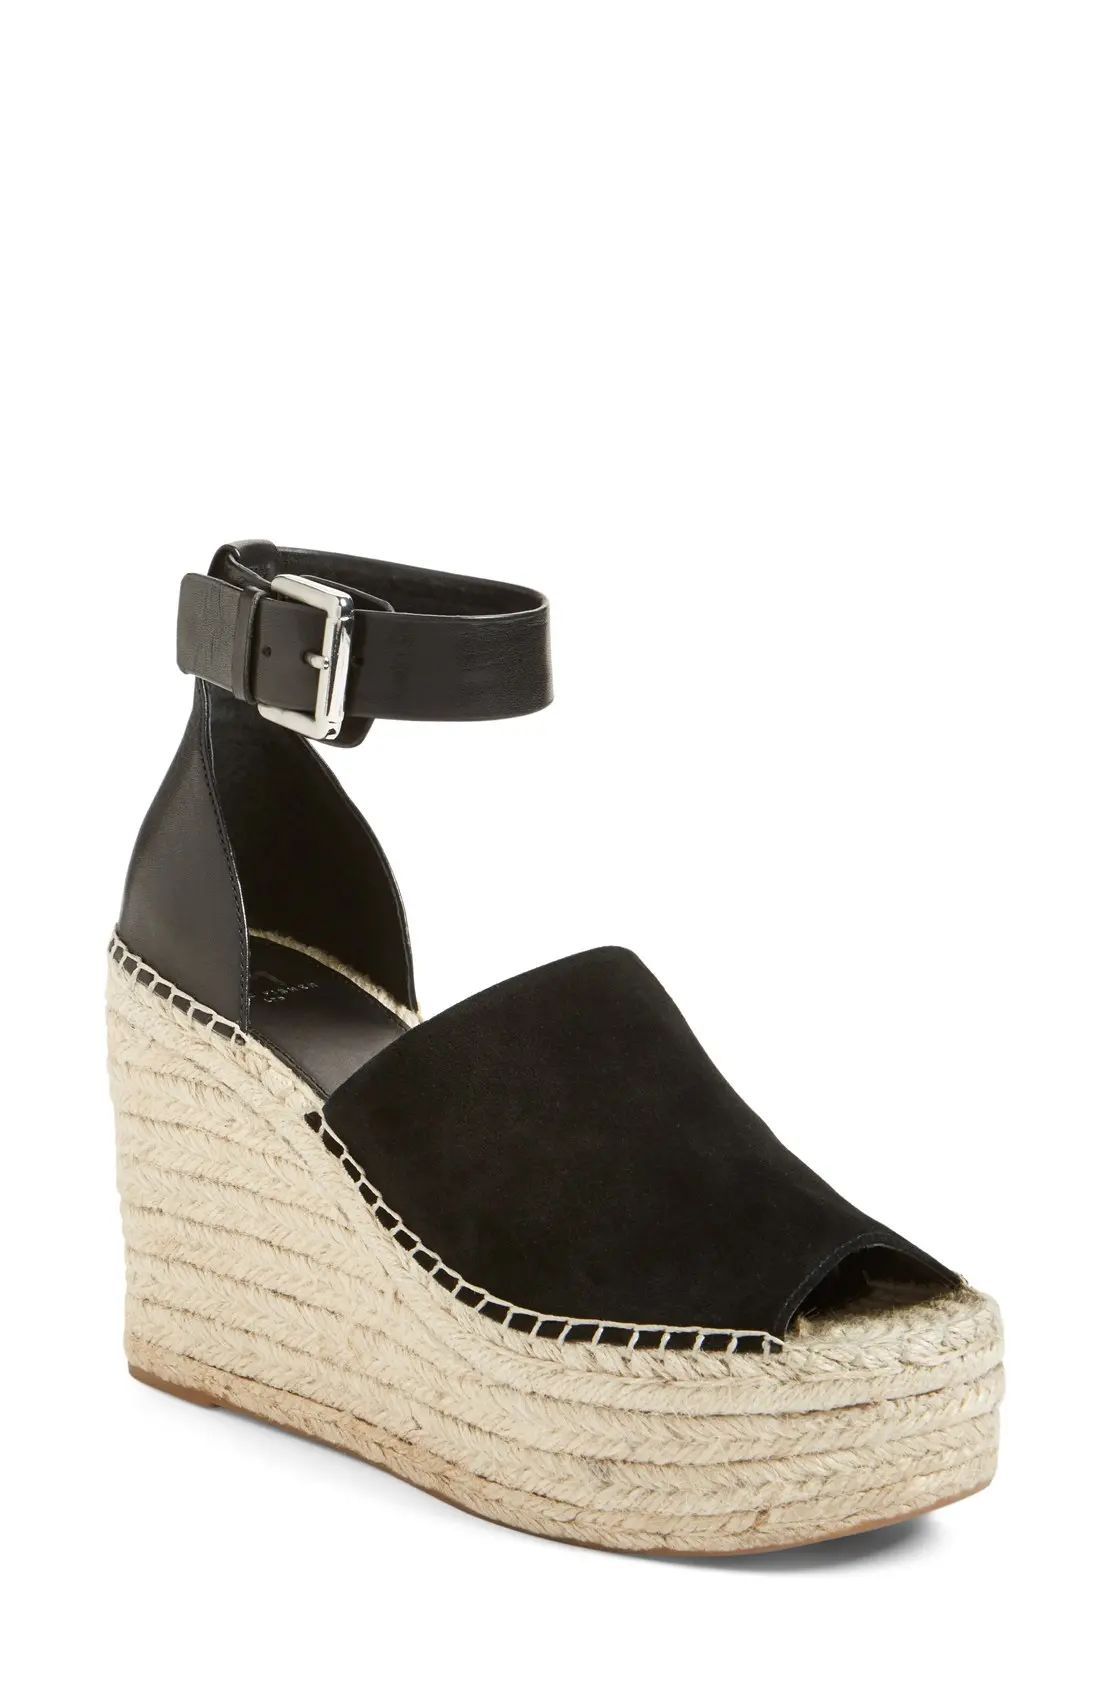 Women's Marc Fisher Ltd Adalyn Espadrille Wedge Sandal, Size 6.5 M - Black | Nordstrom